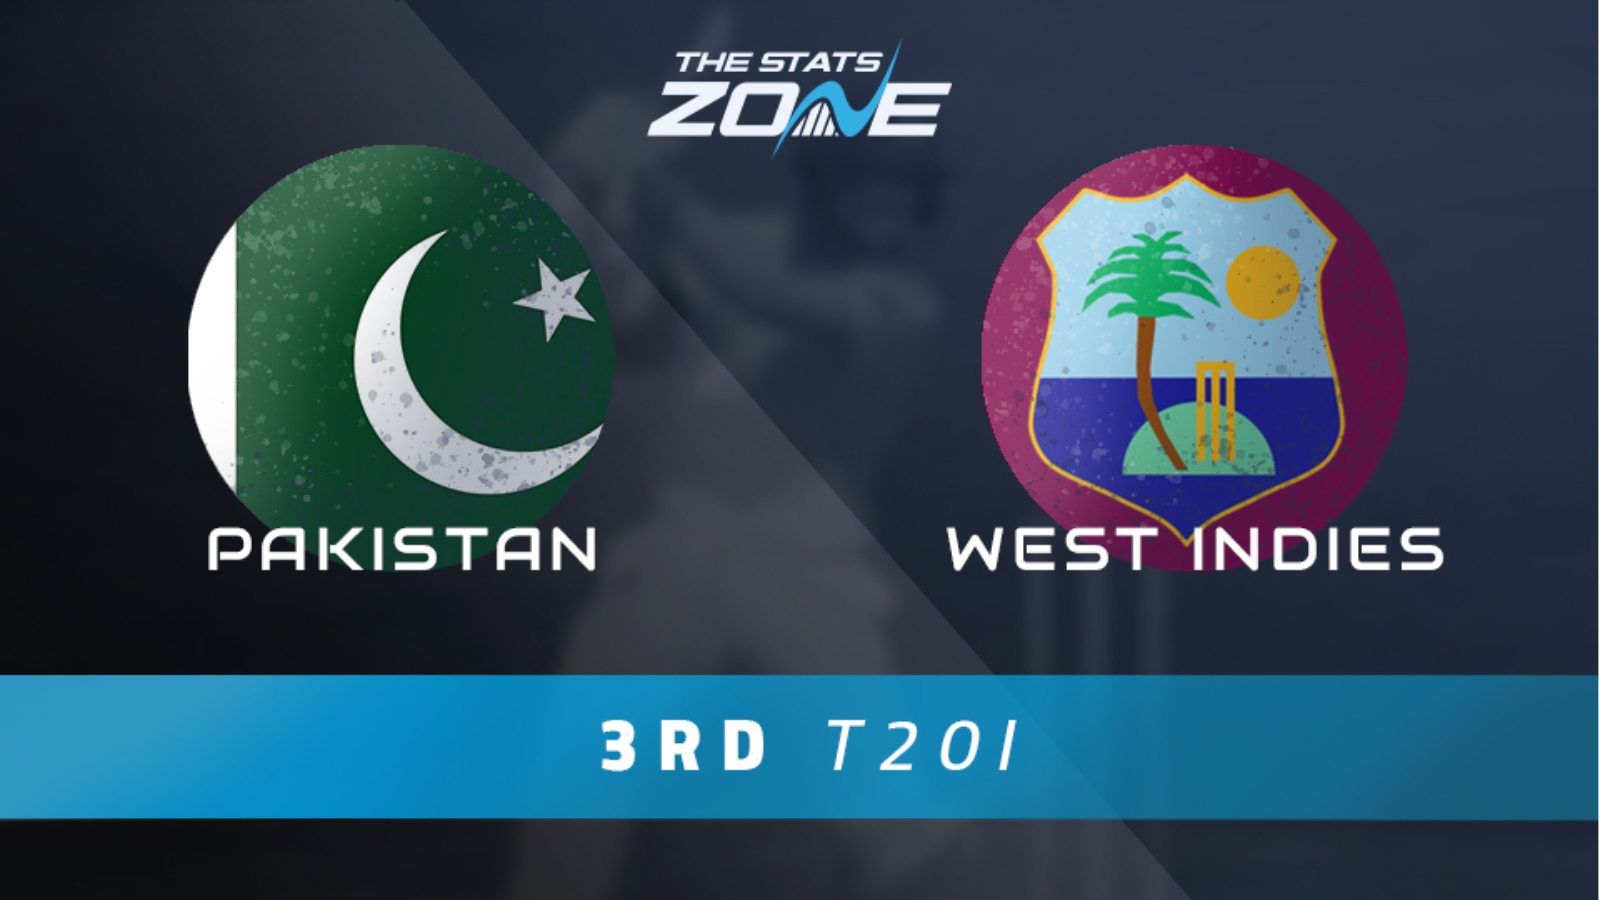 Pakistan vs west indies